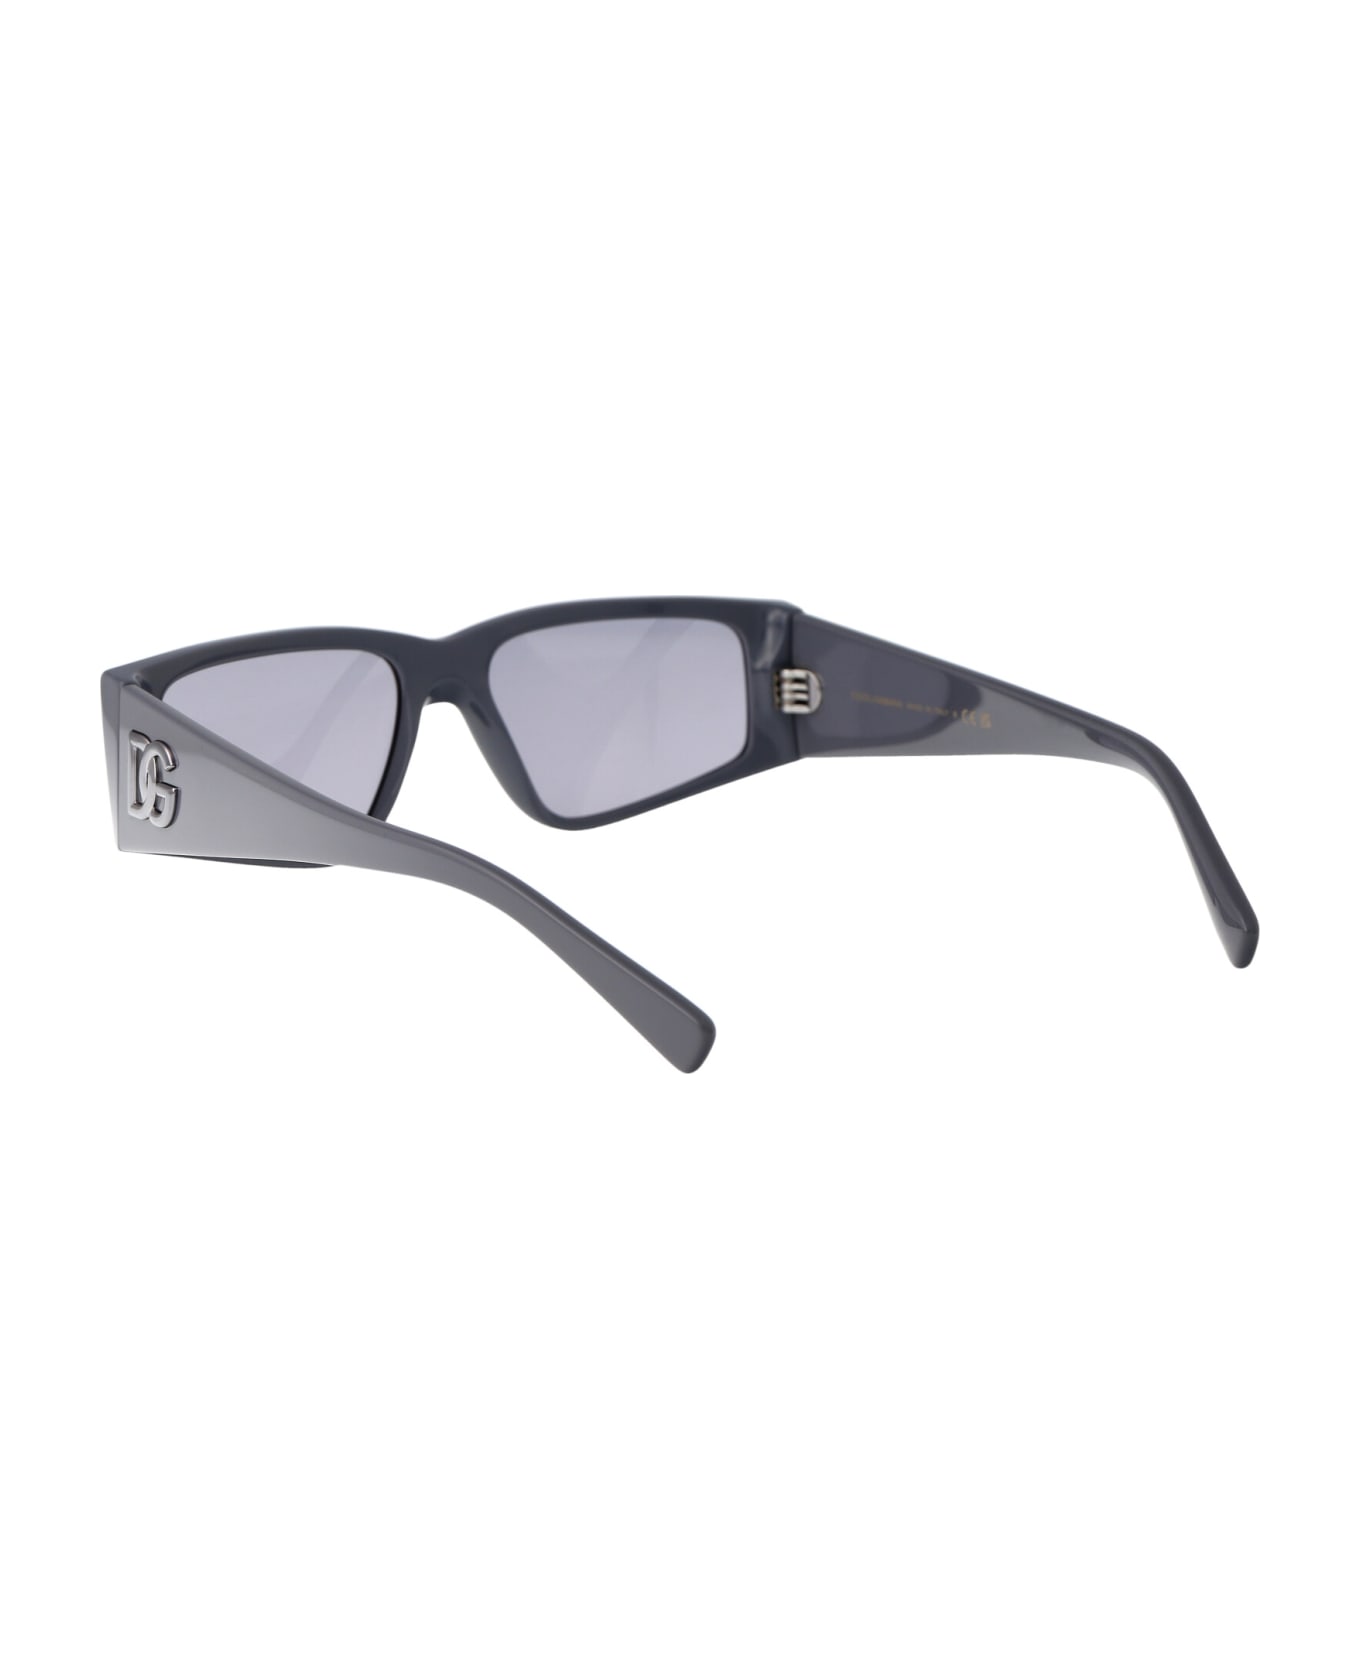 Dolce & Gabbana Eyewear 0dg4453 Sunglasses - 3090M3 Grey